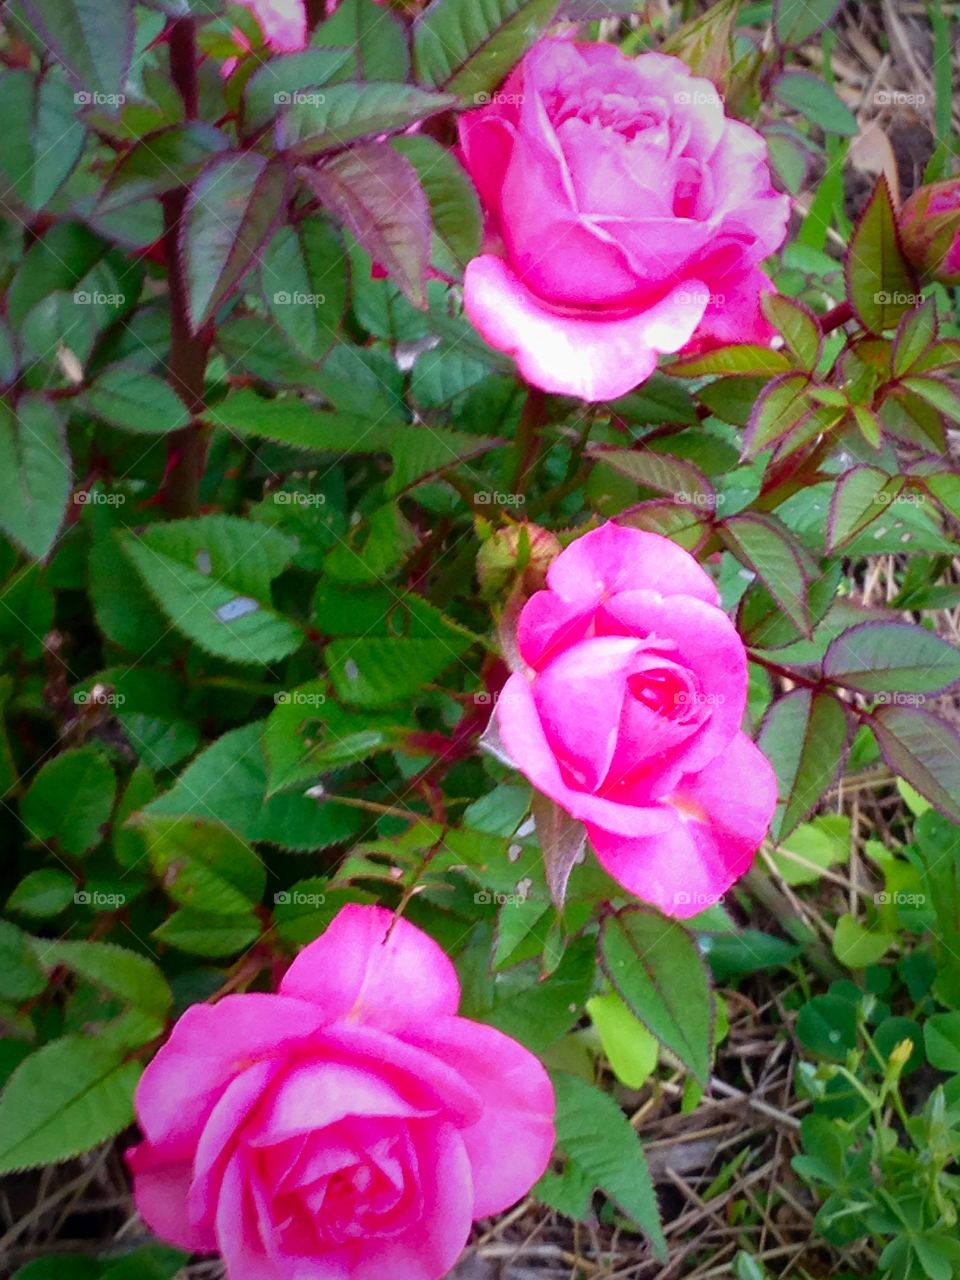 Three Roses. Three pink miniature roses